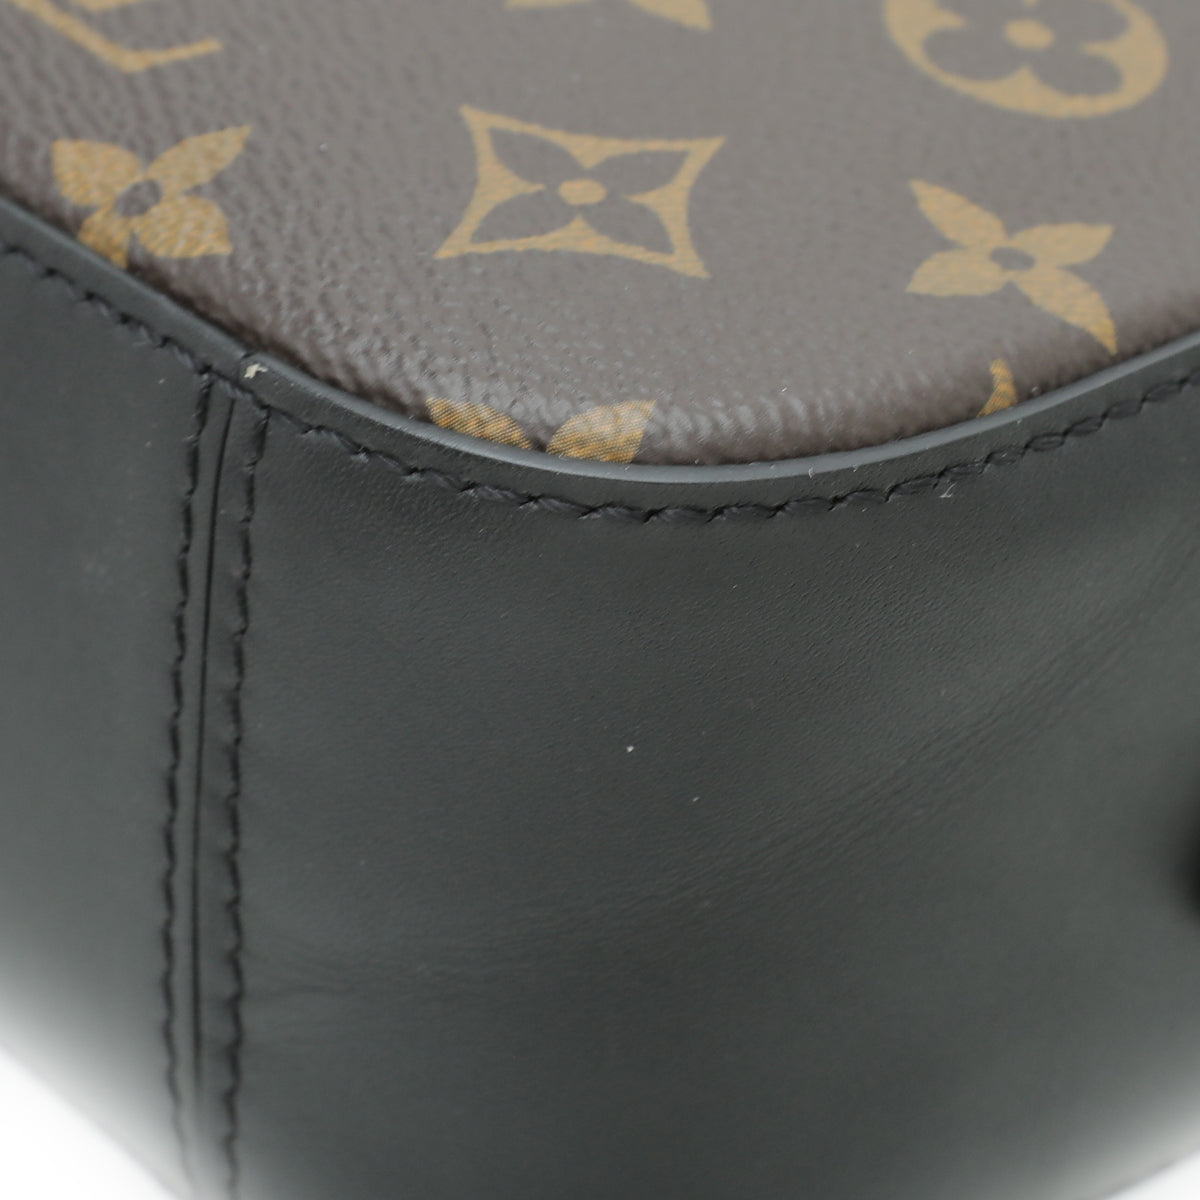 Saintonge Monogram – Keeks Designer Handbags